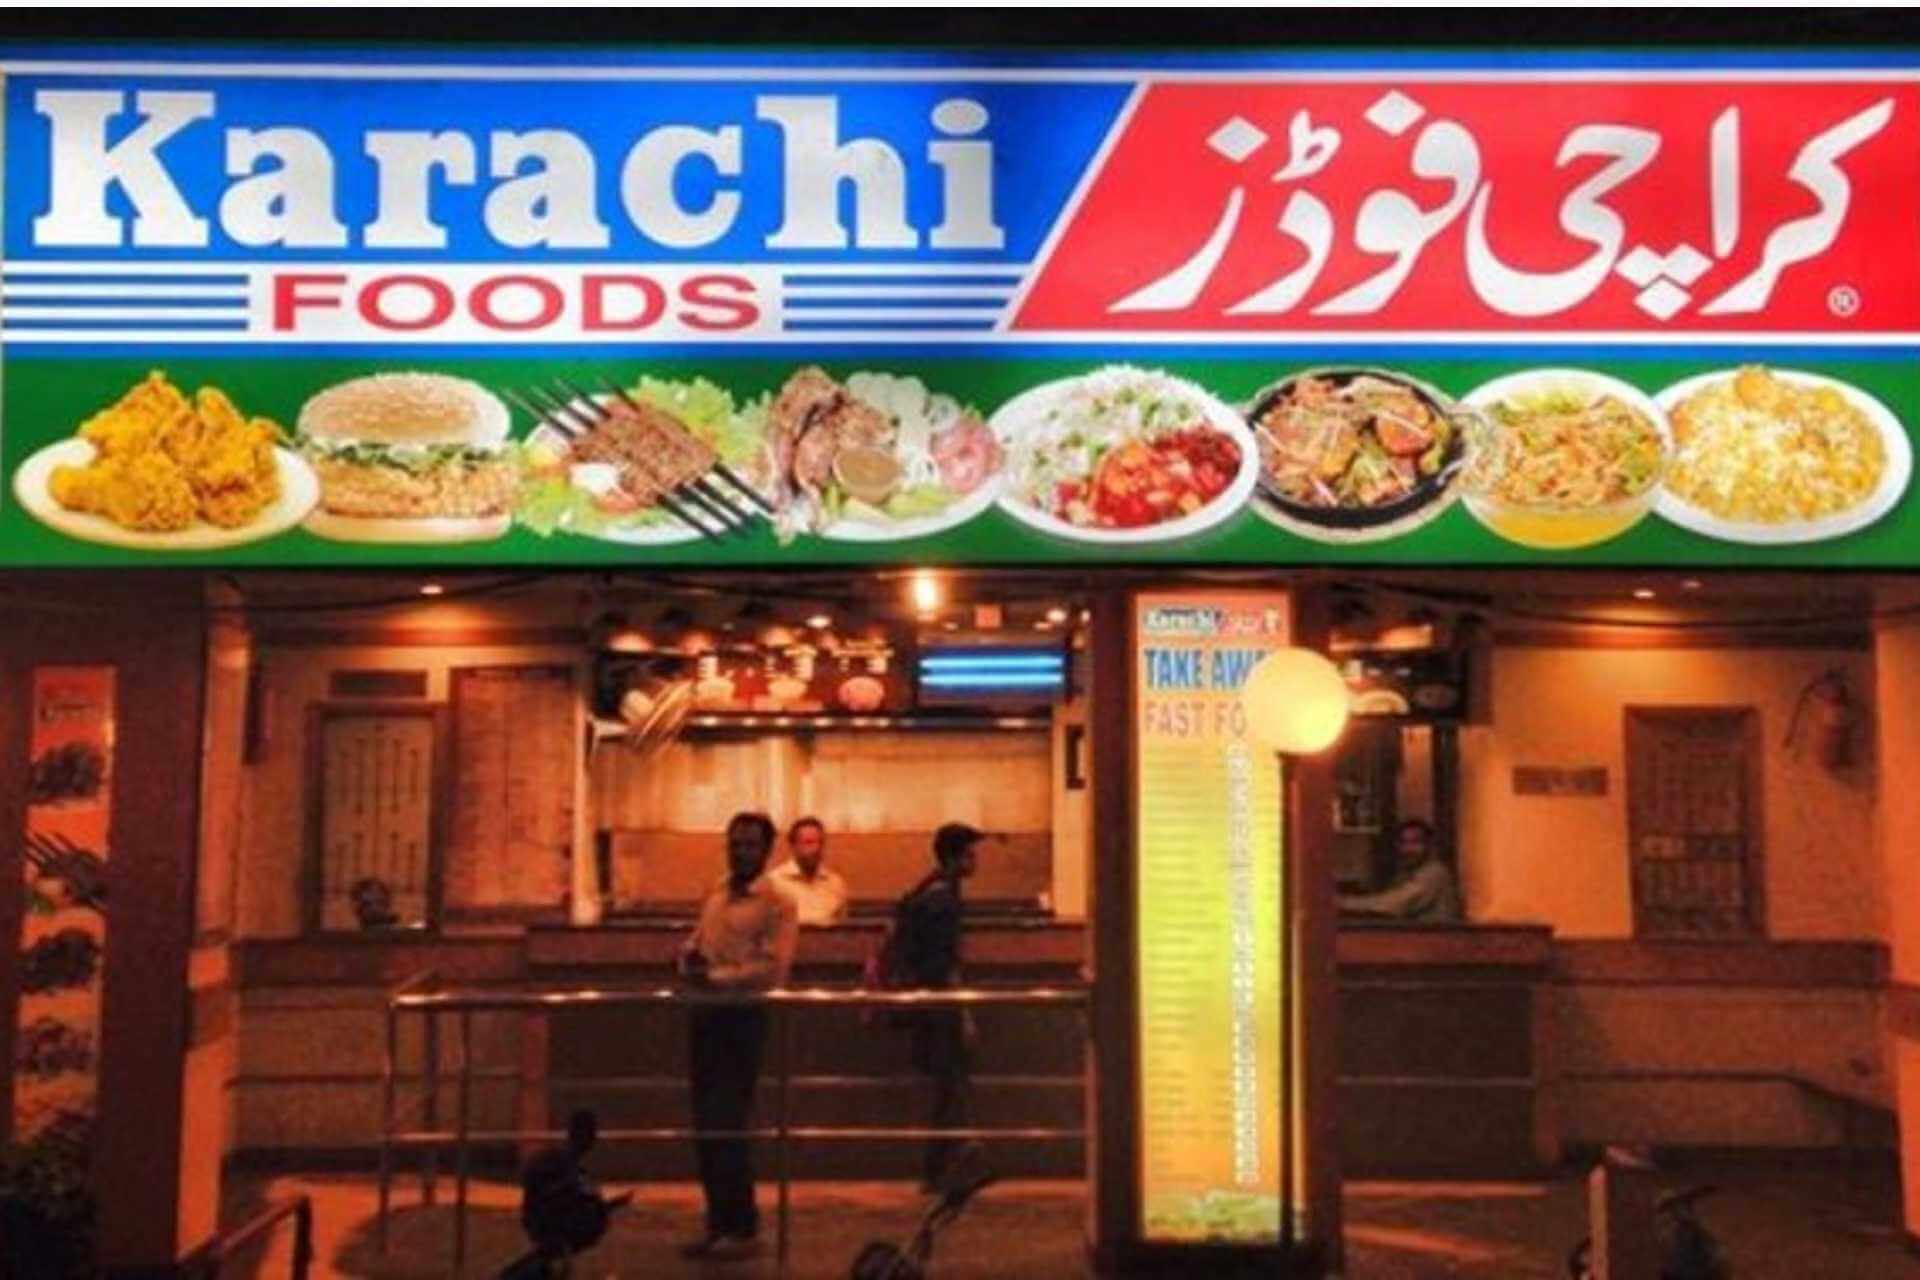 Karachi Food Restaurant